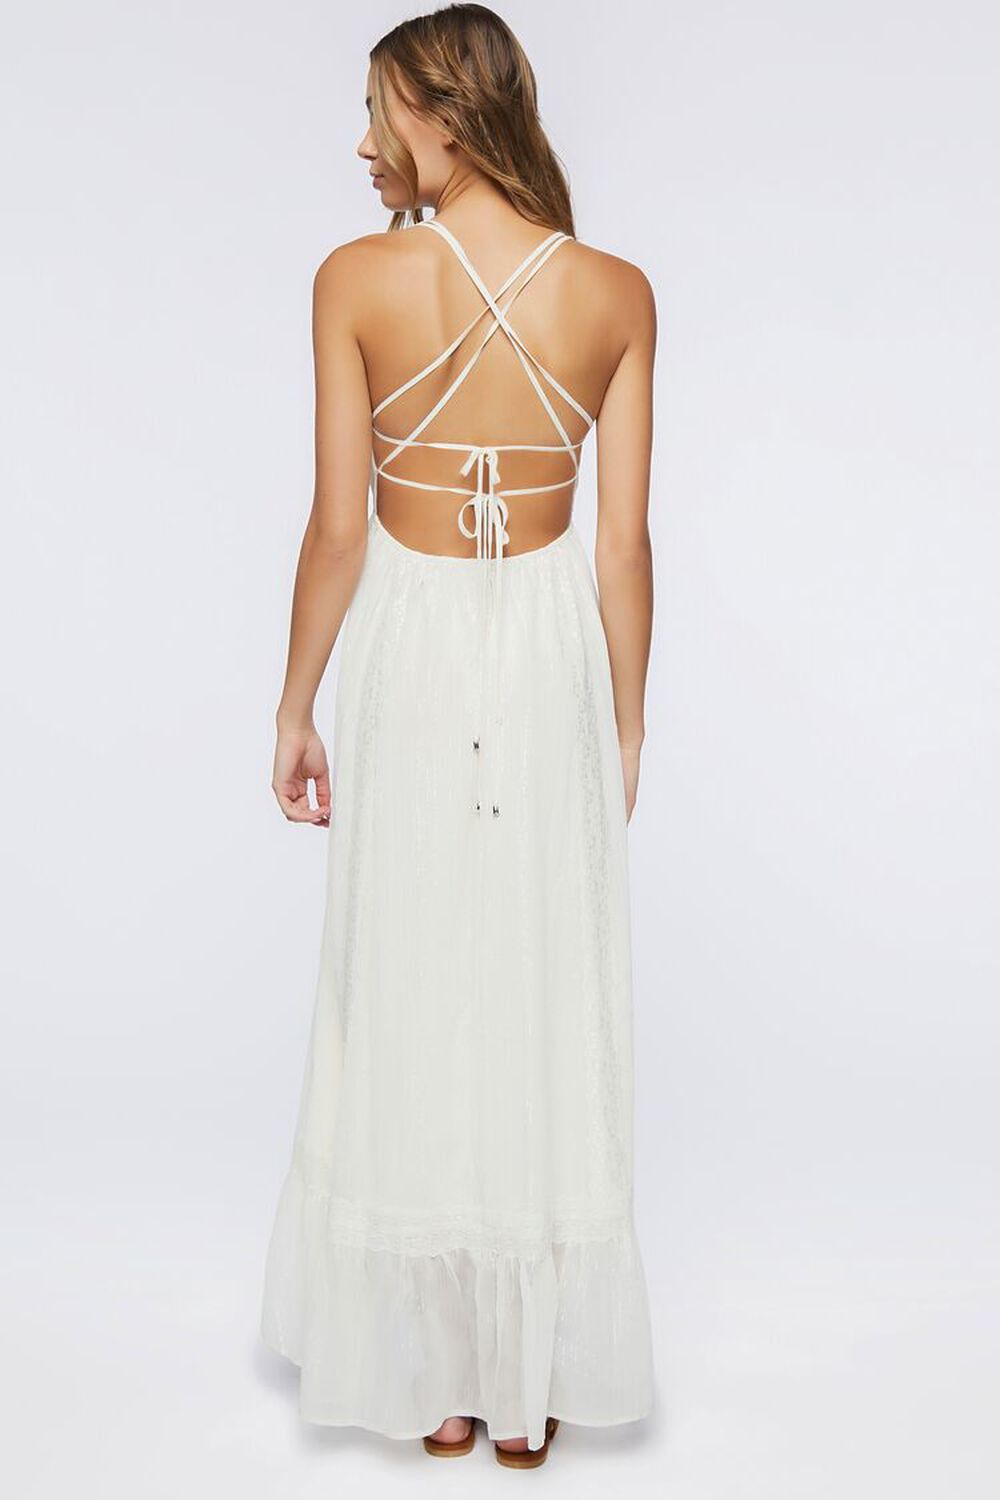 VANILLA Crisscross Lace-Trim Maxi Dress, image 3